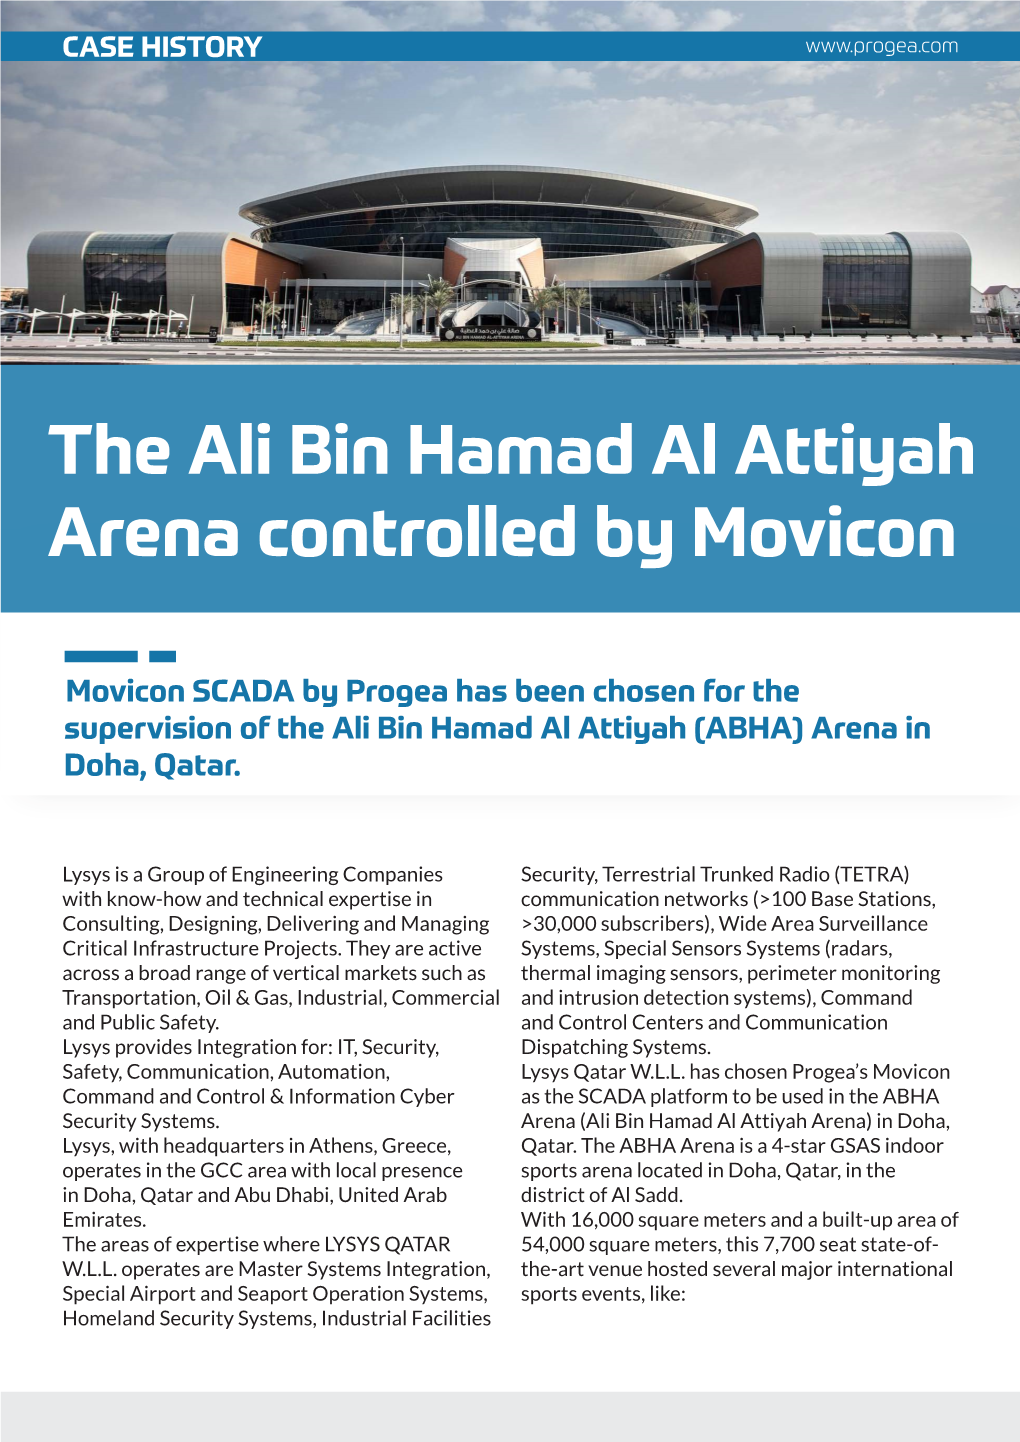 The Ali Bin Hamad Al Attiyah Arena Controlled by Movicon